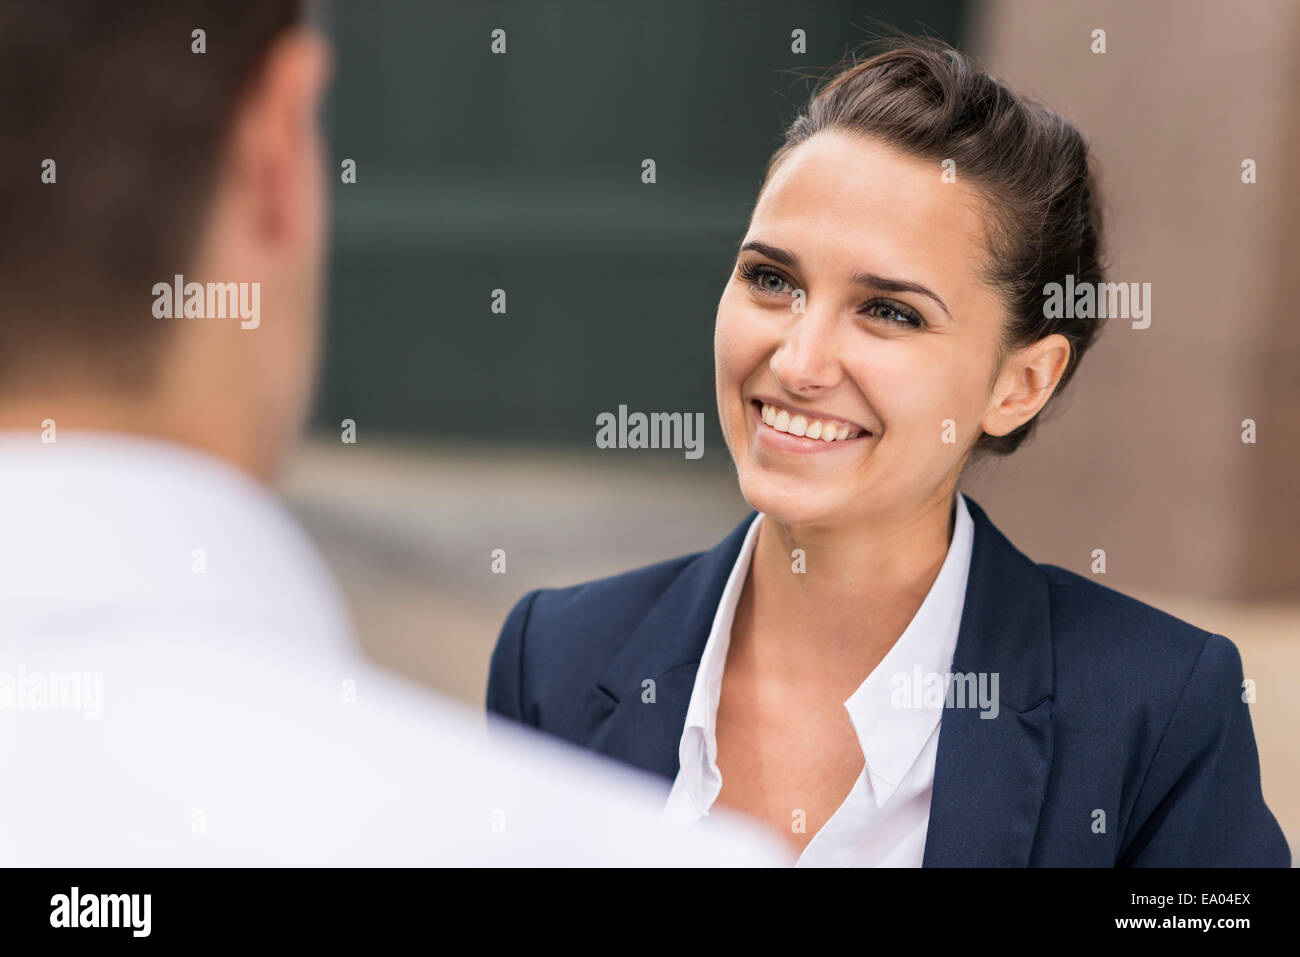 businesswoman and man chatting, London, UK Stock Photo